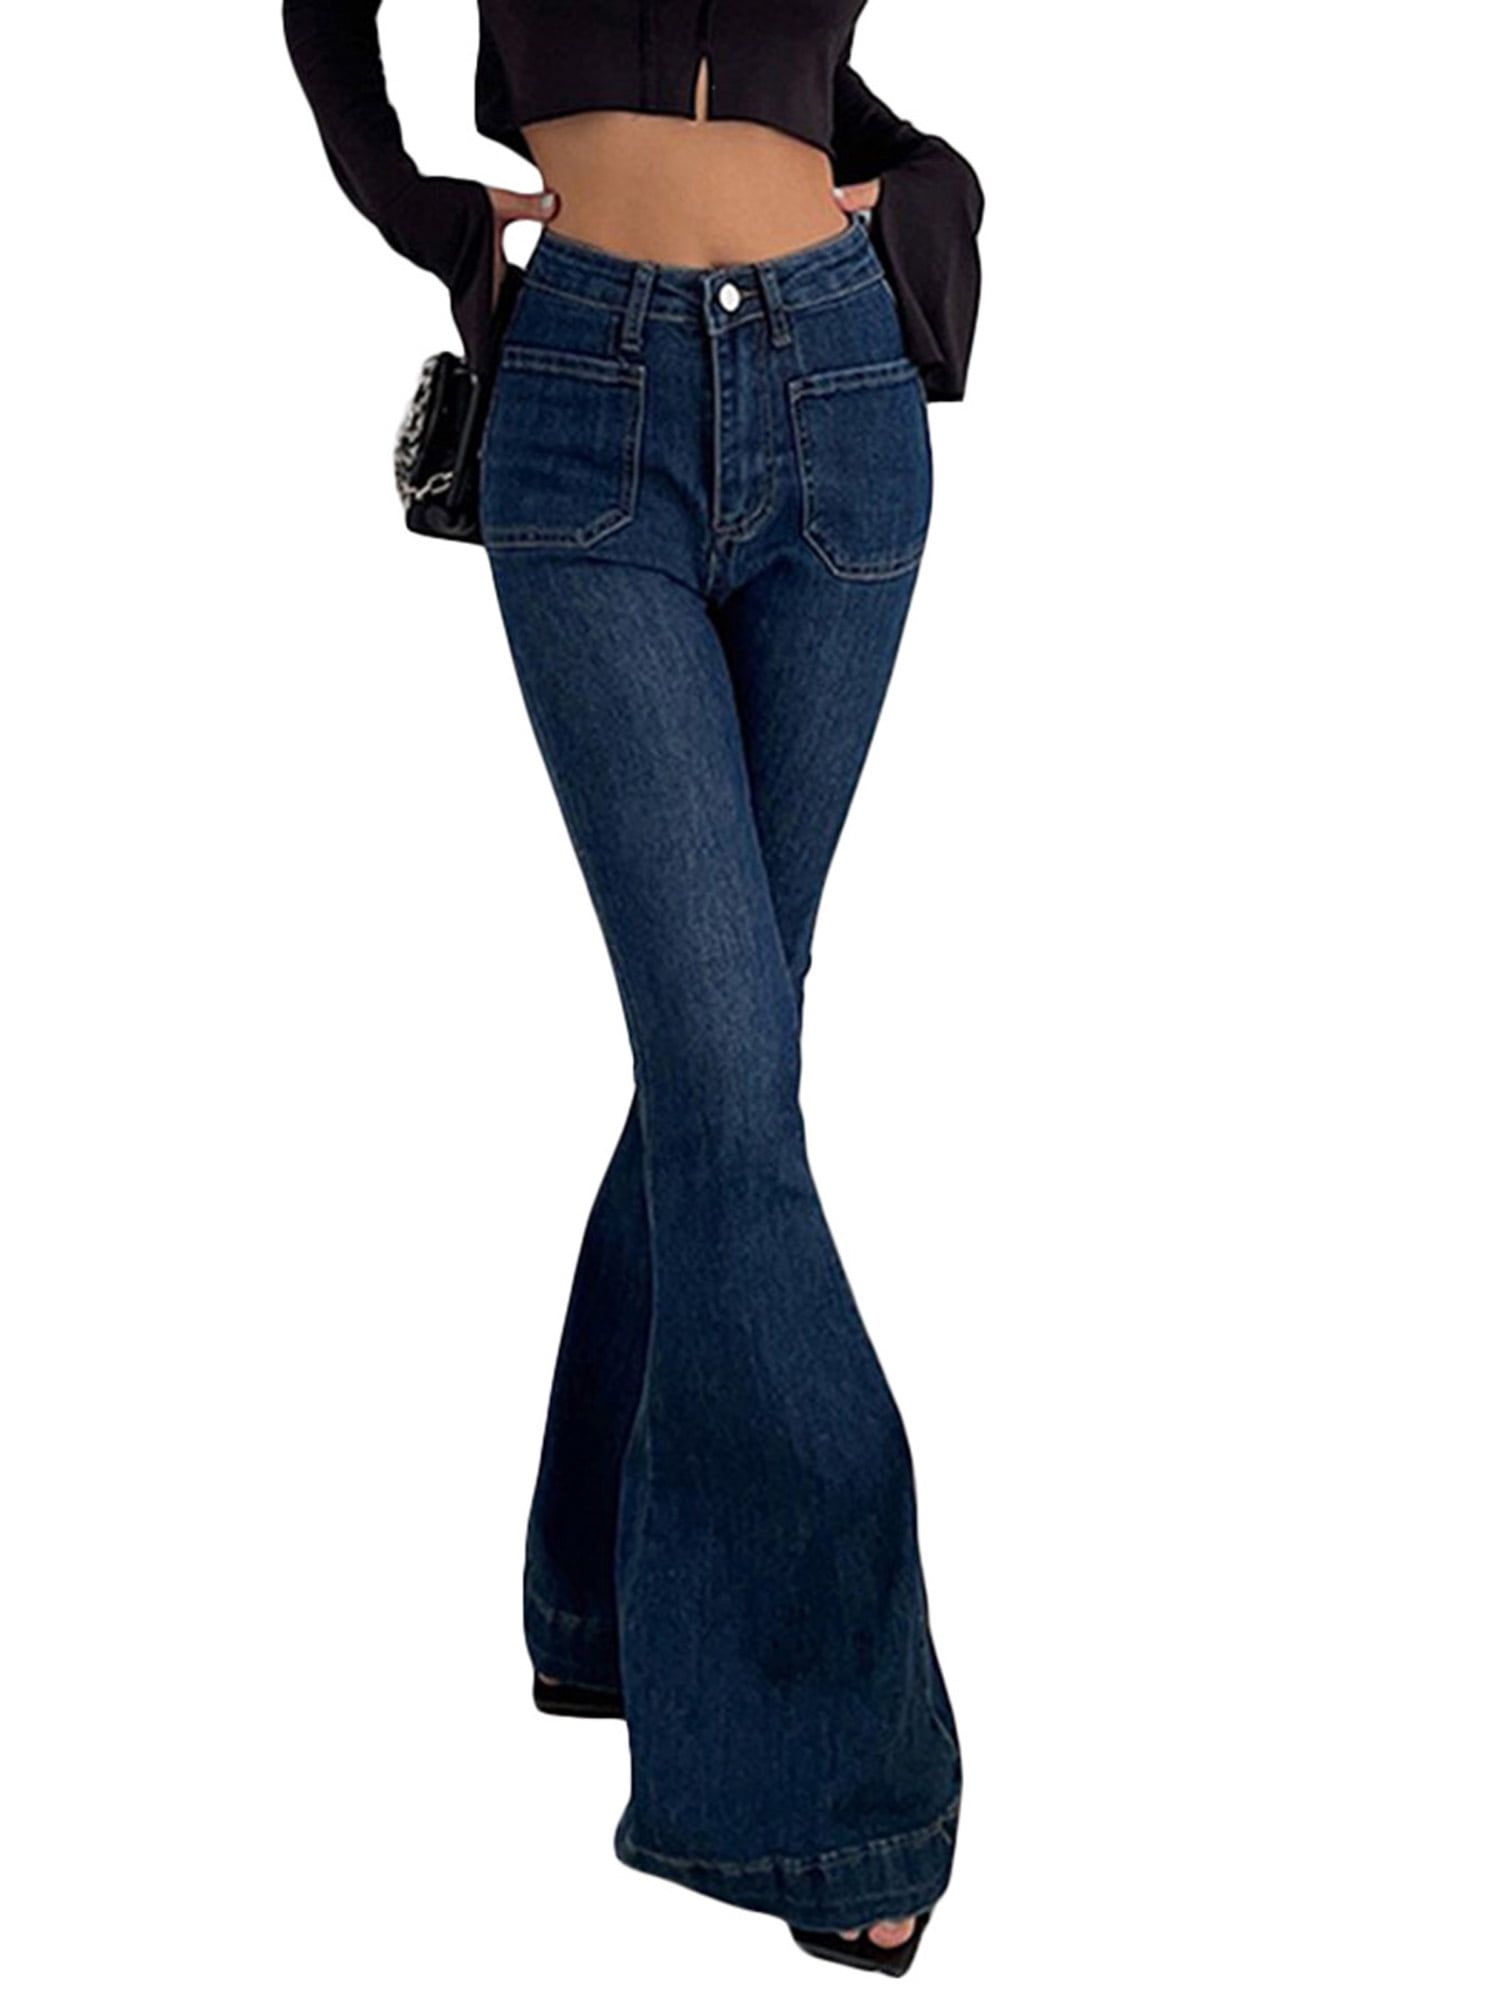 Women's High Rise Vintage Flare Jean, Women's Bottoms